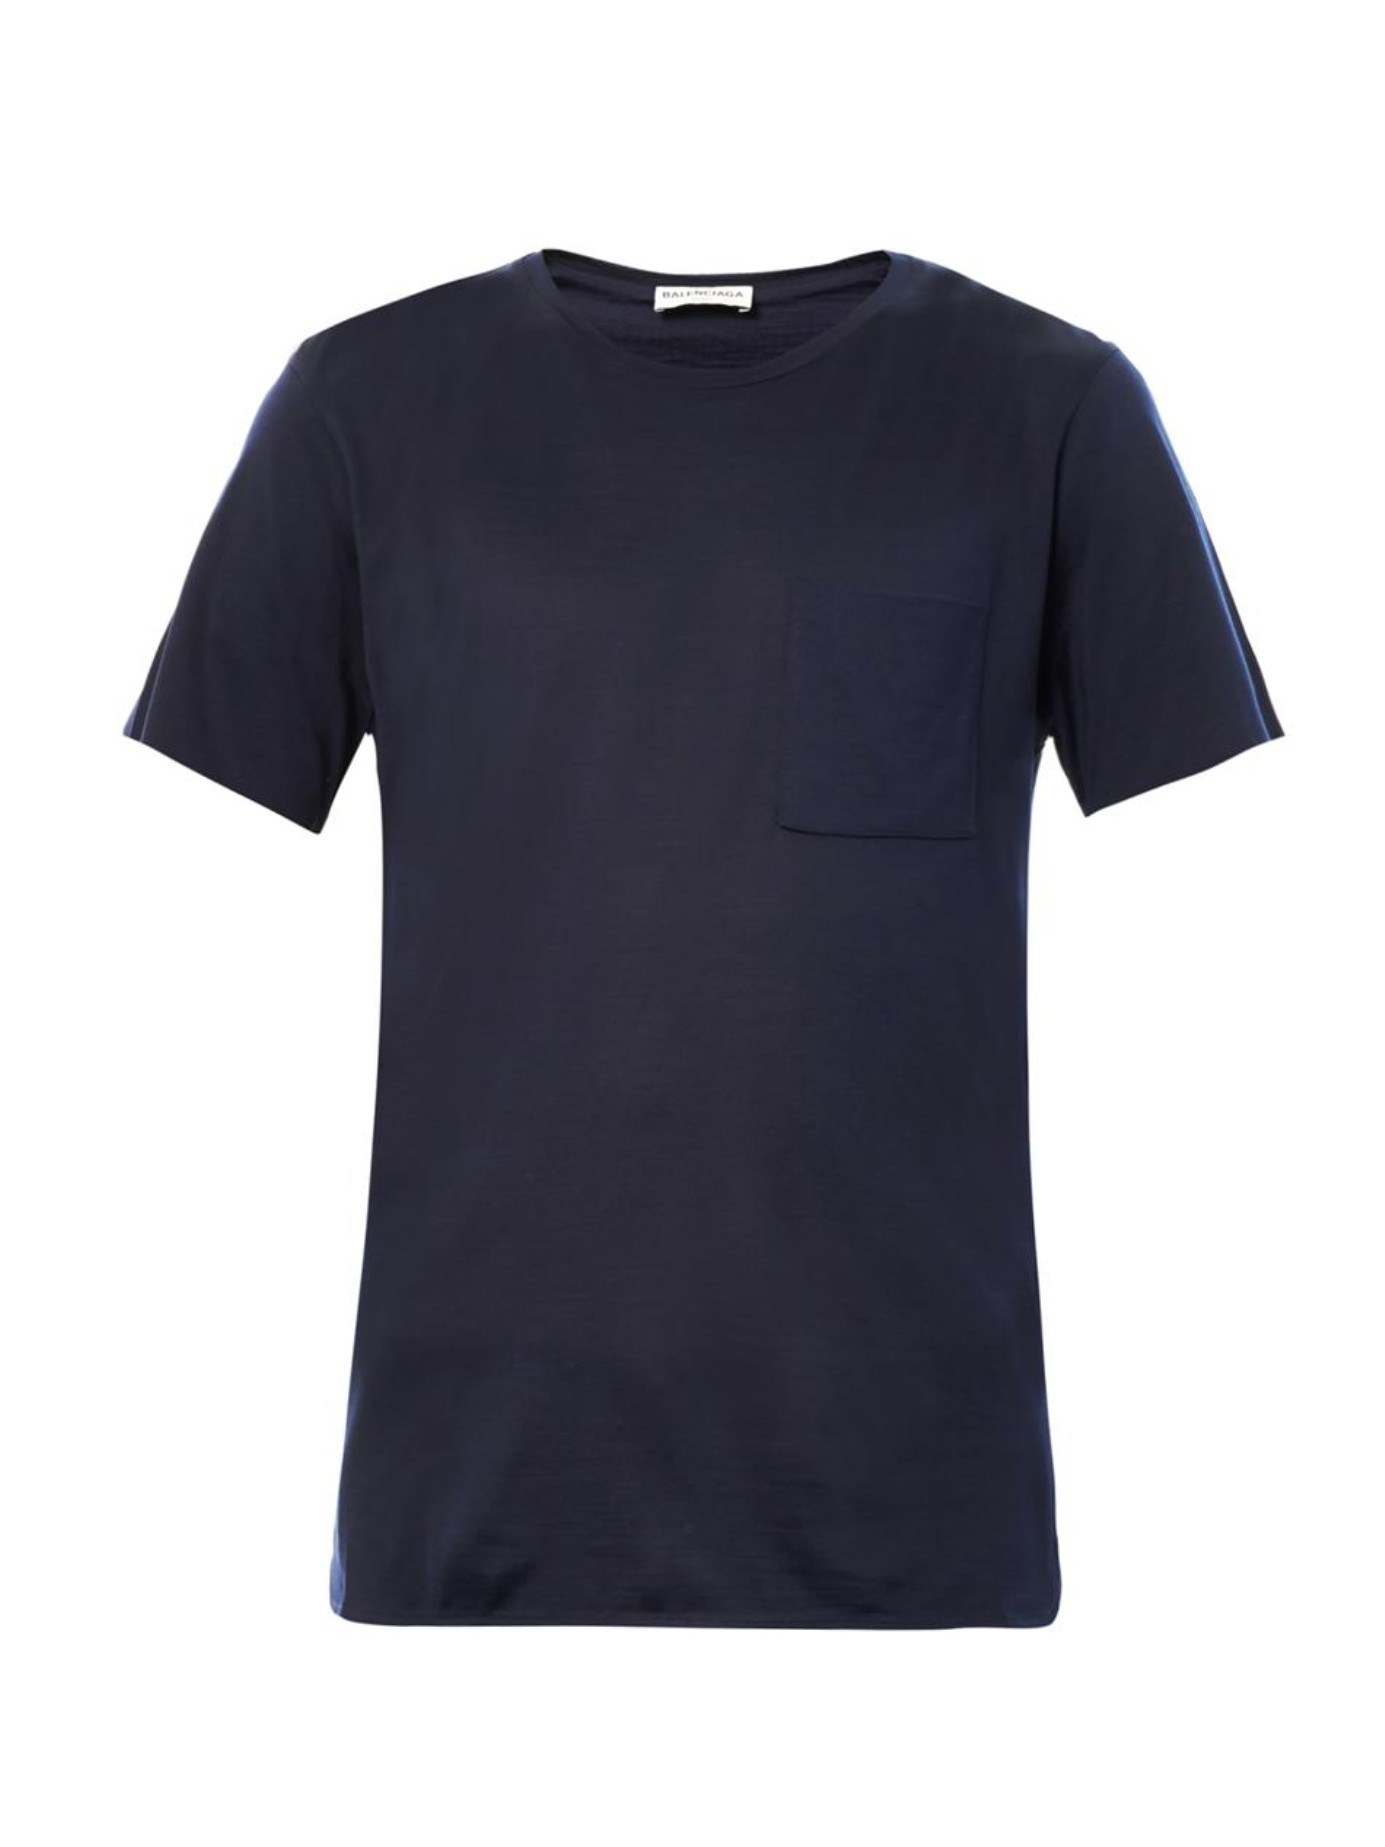 Lyst - Balenciaga Silk-Jersey T-Shirt in Blue for Men